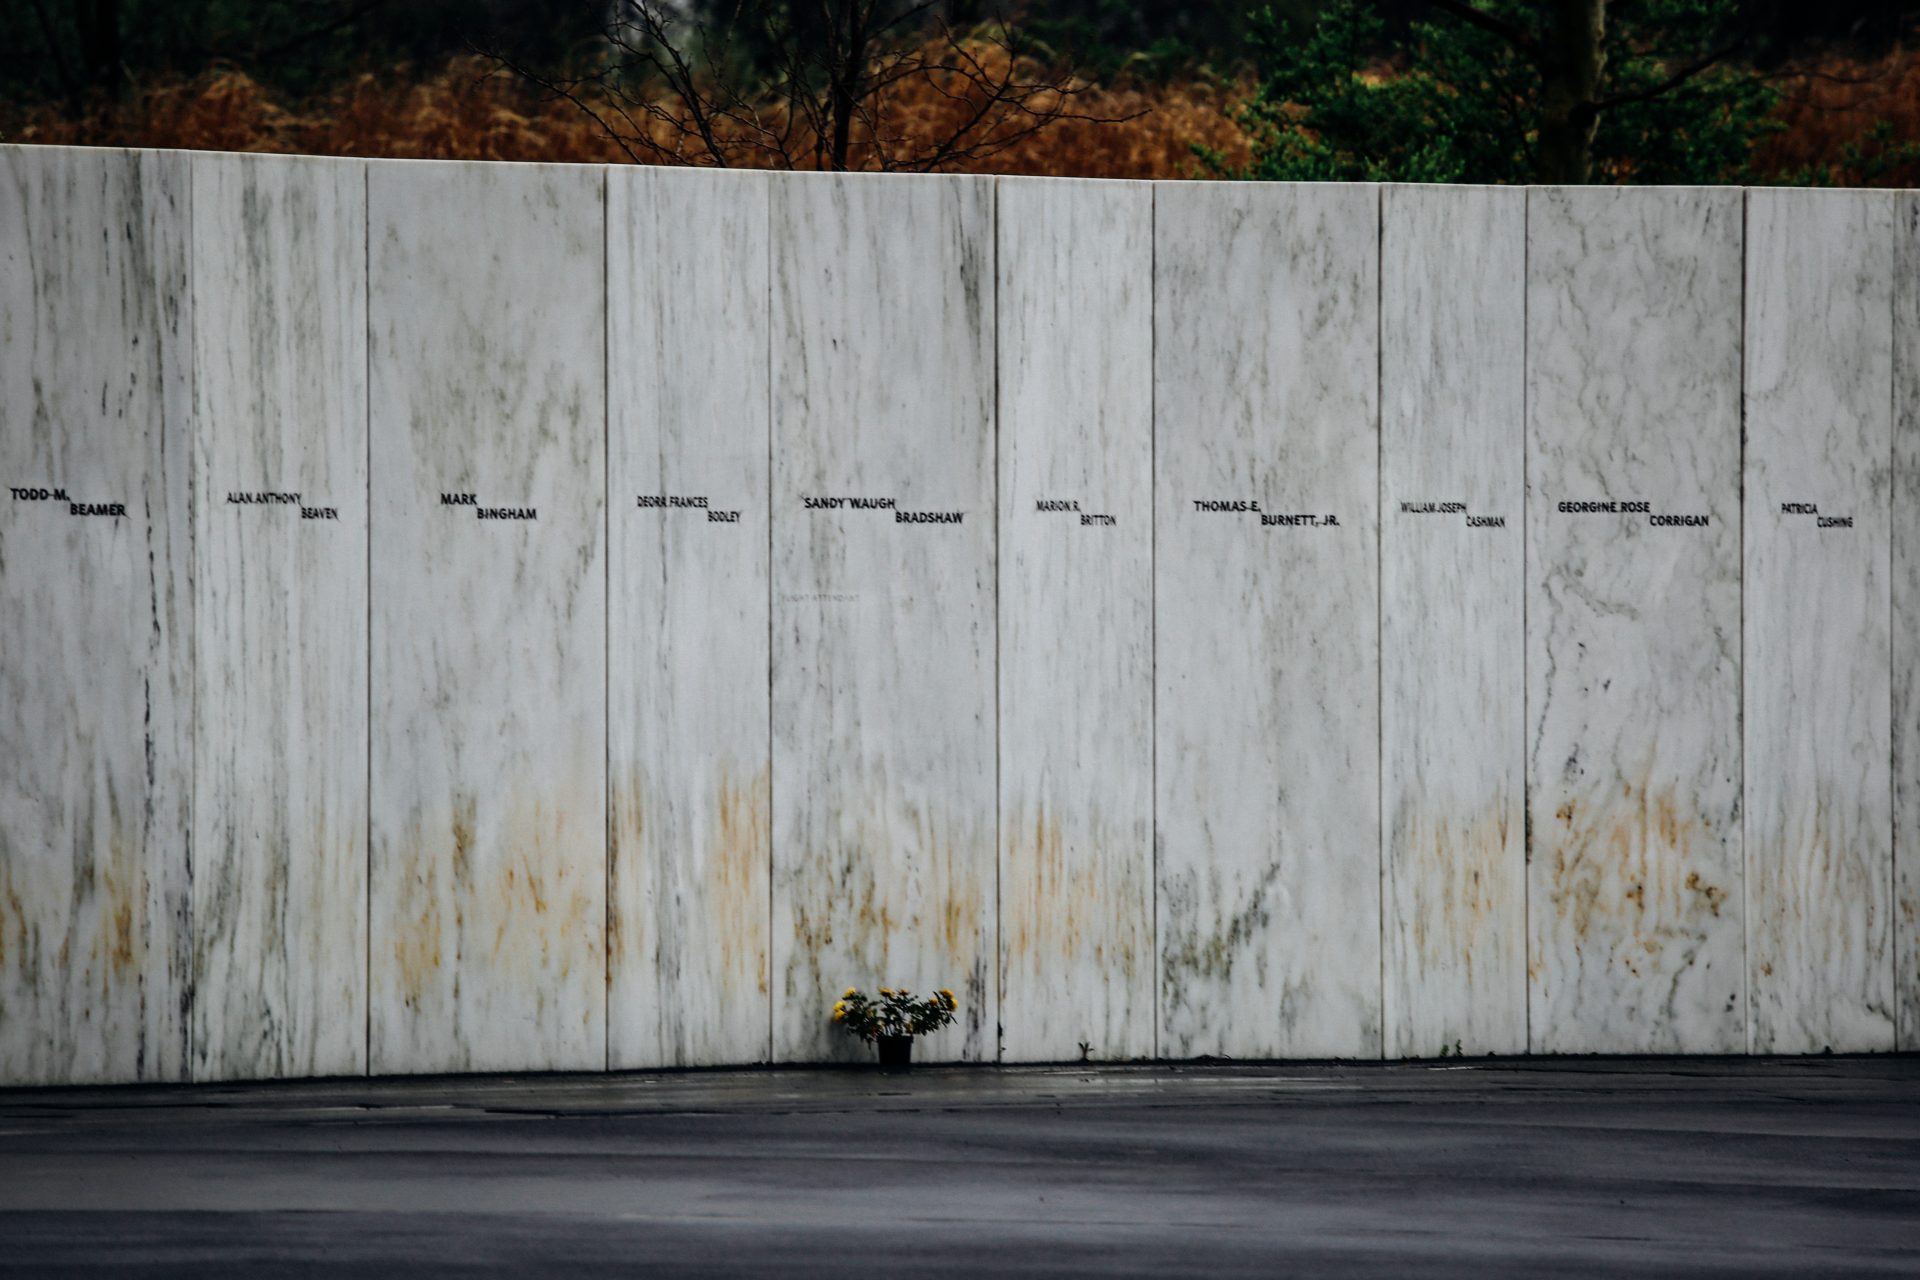 The Wall of Names at the Flight 93 National Memorial